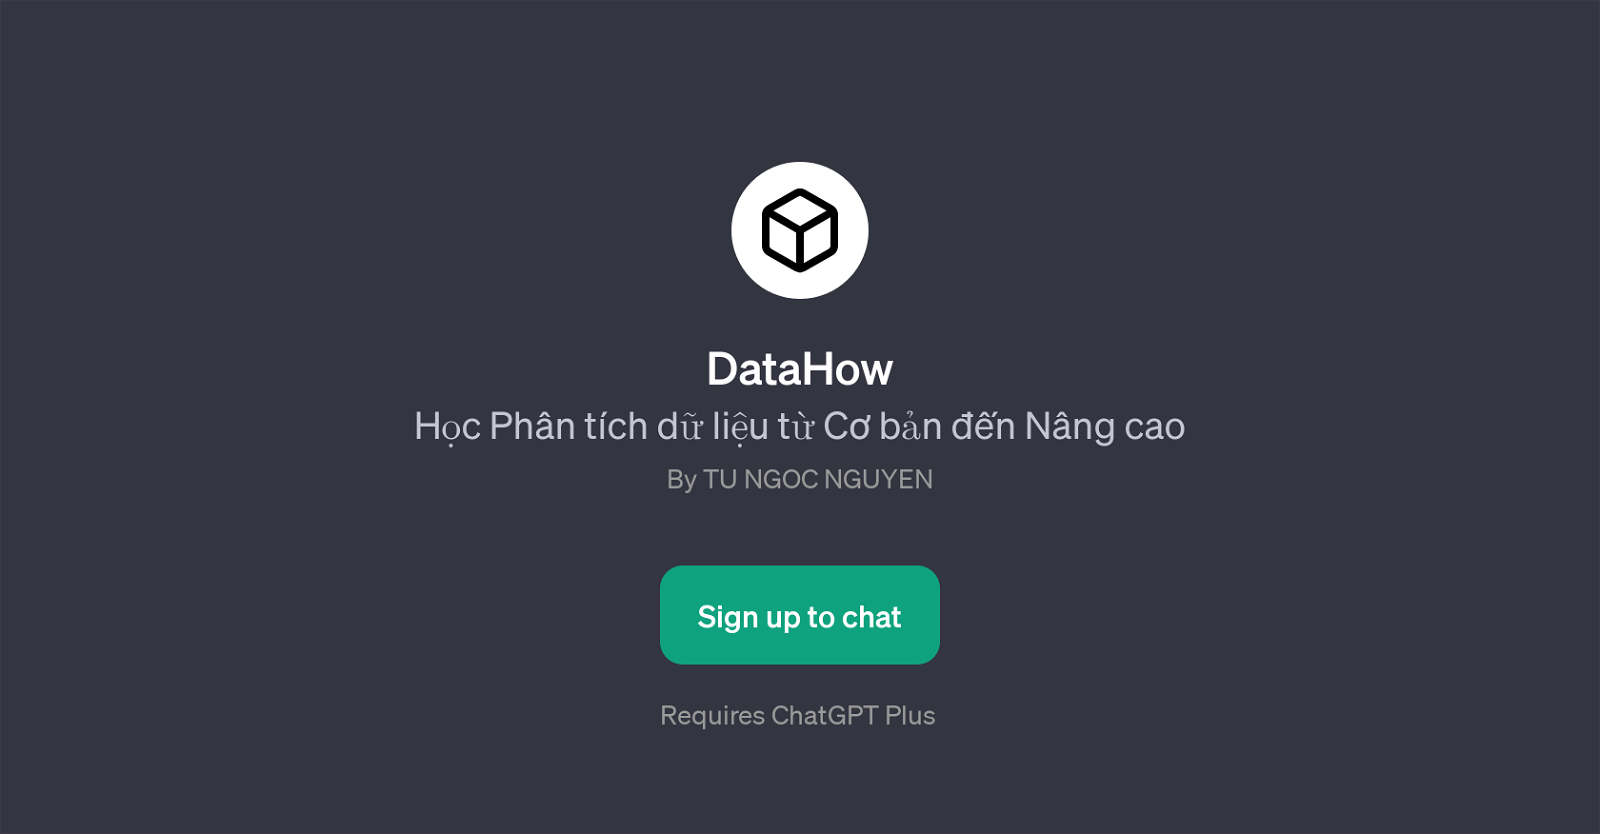 DataHow website